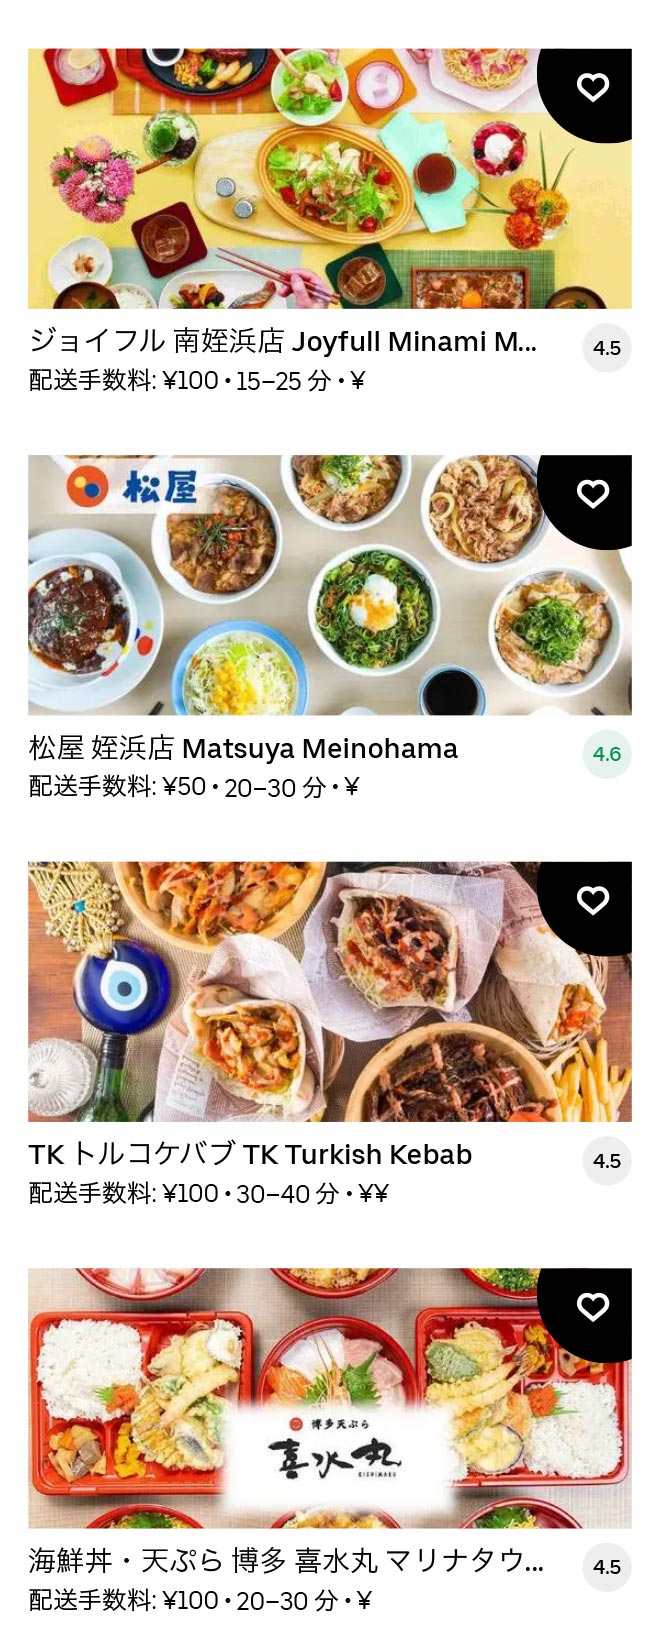 Meinohama menu 2101 03